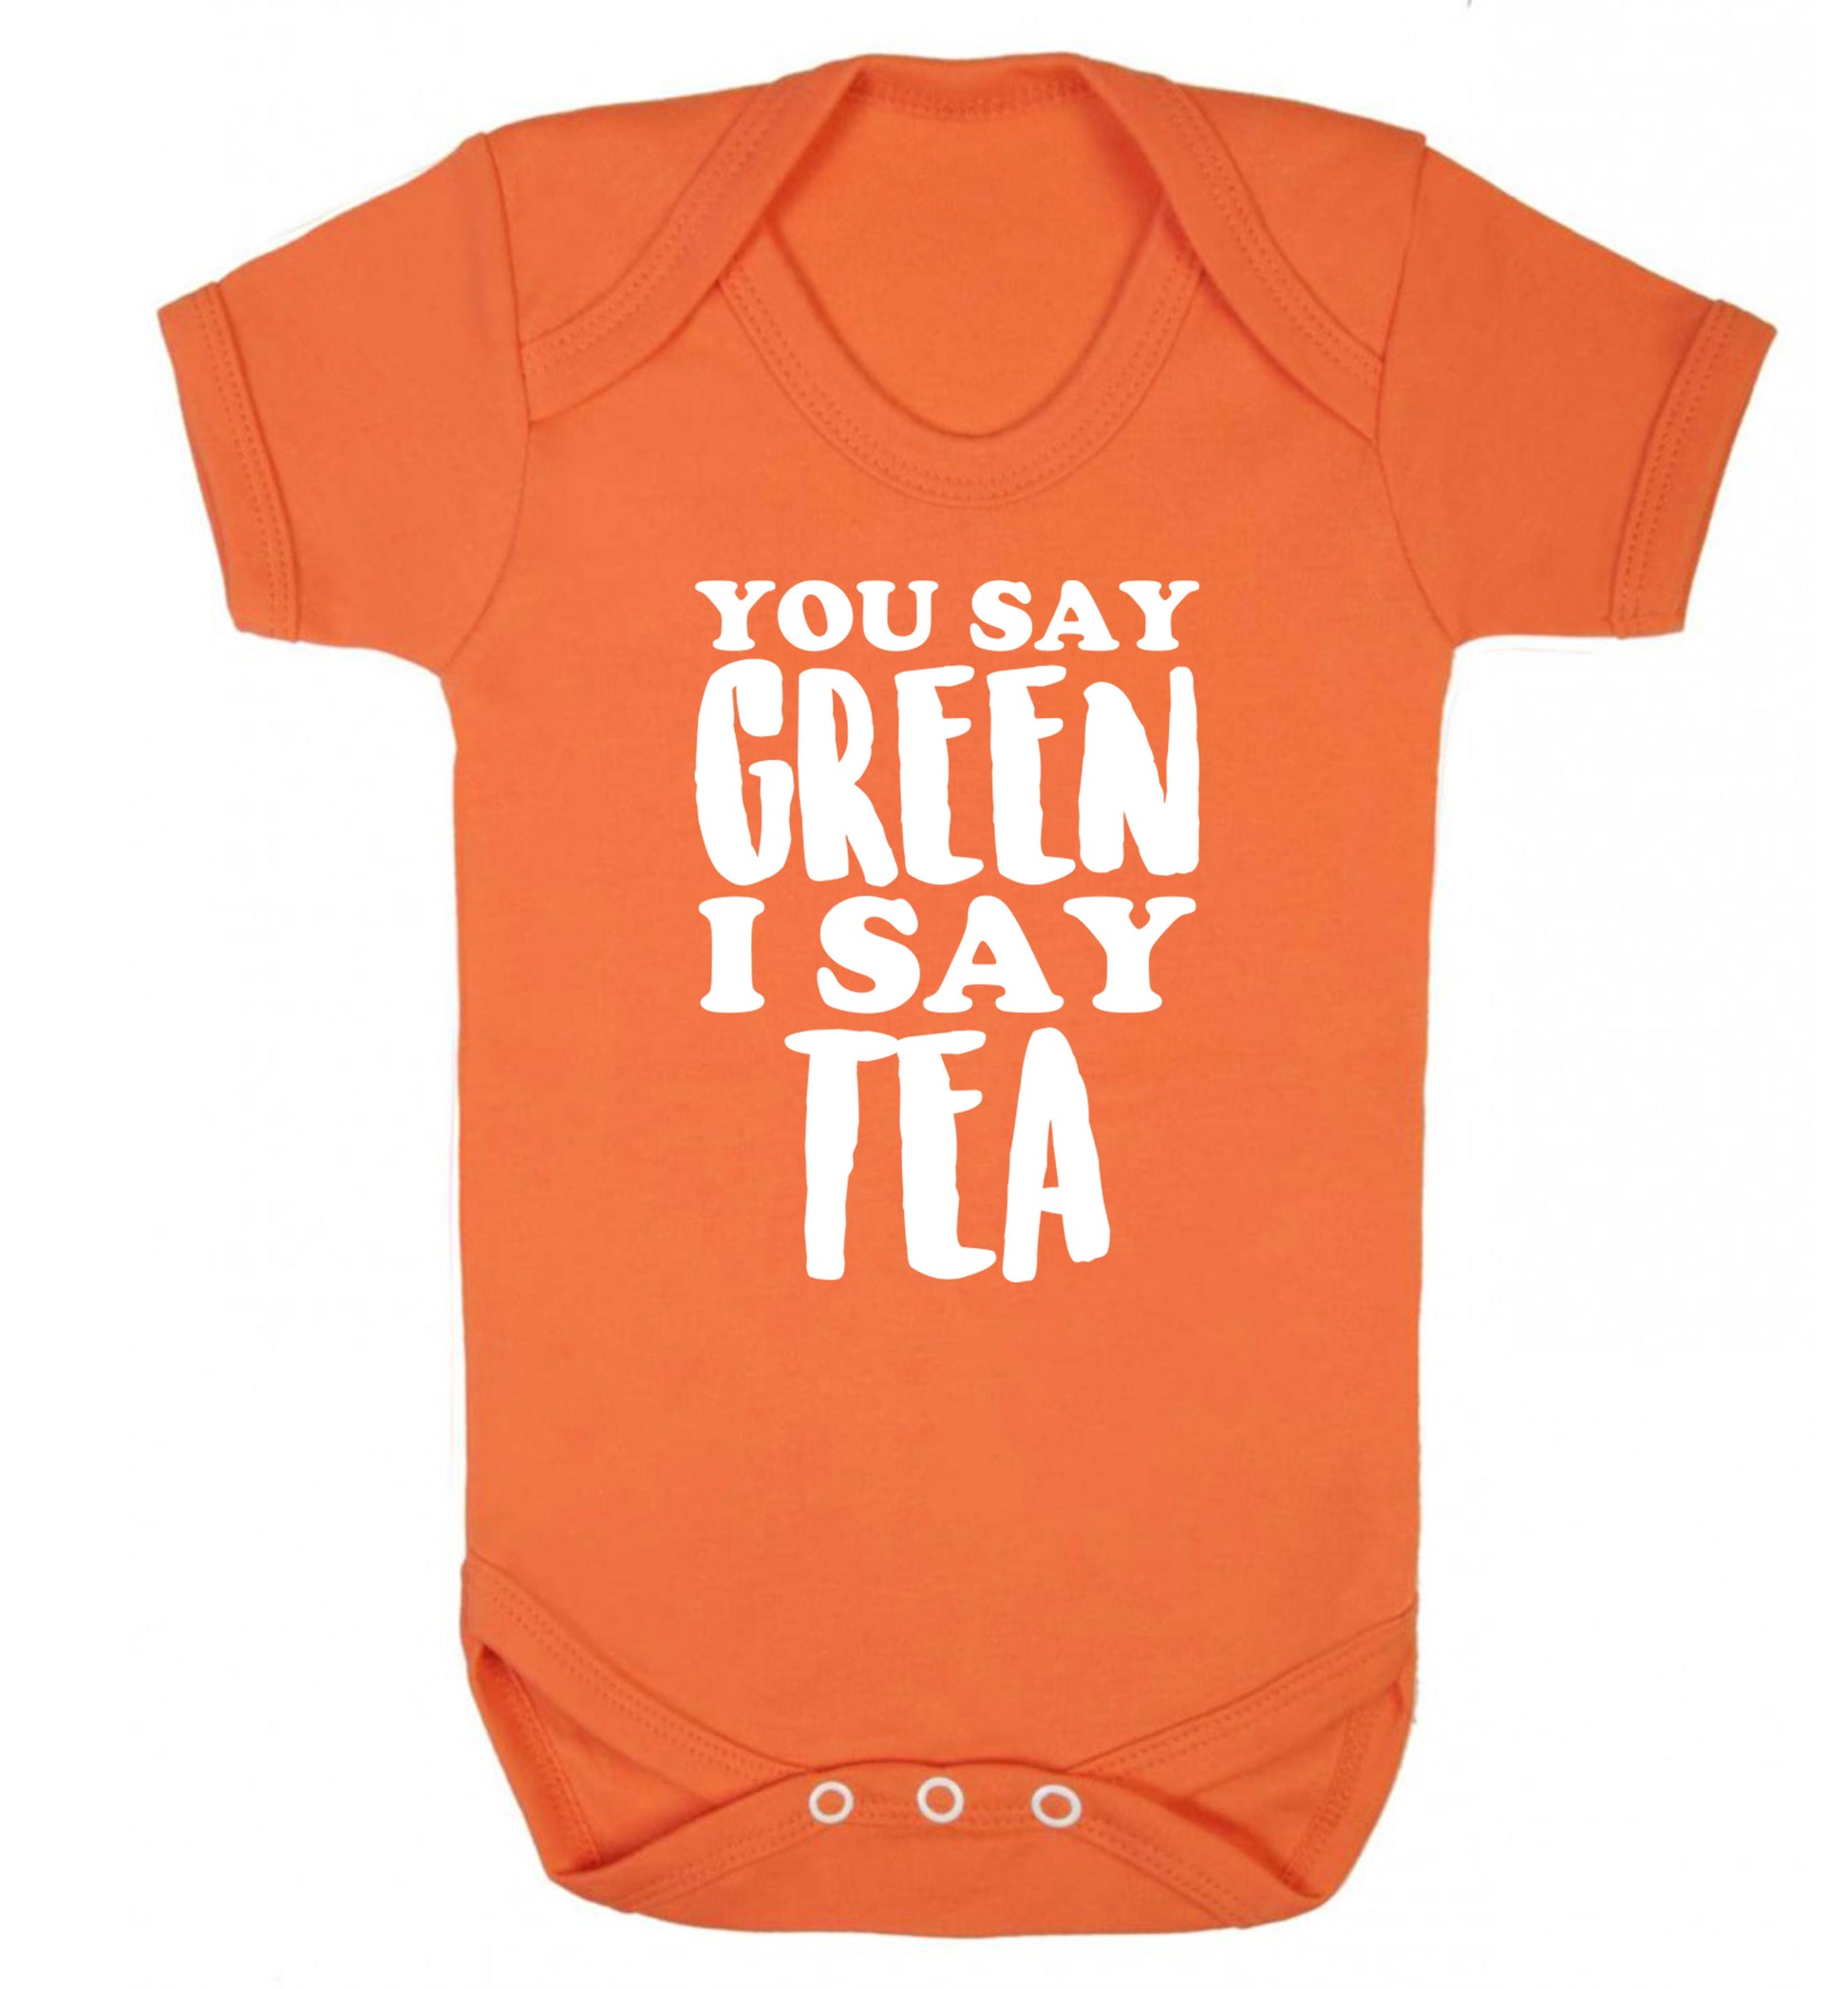 You say green I say tea! Baby Vest orange 18-24 months